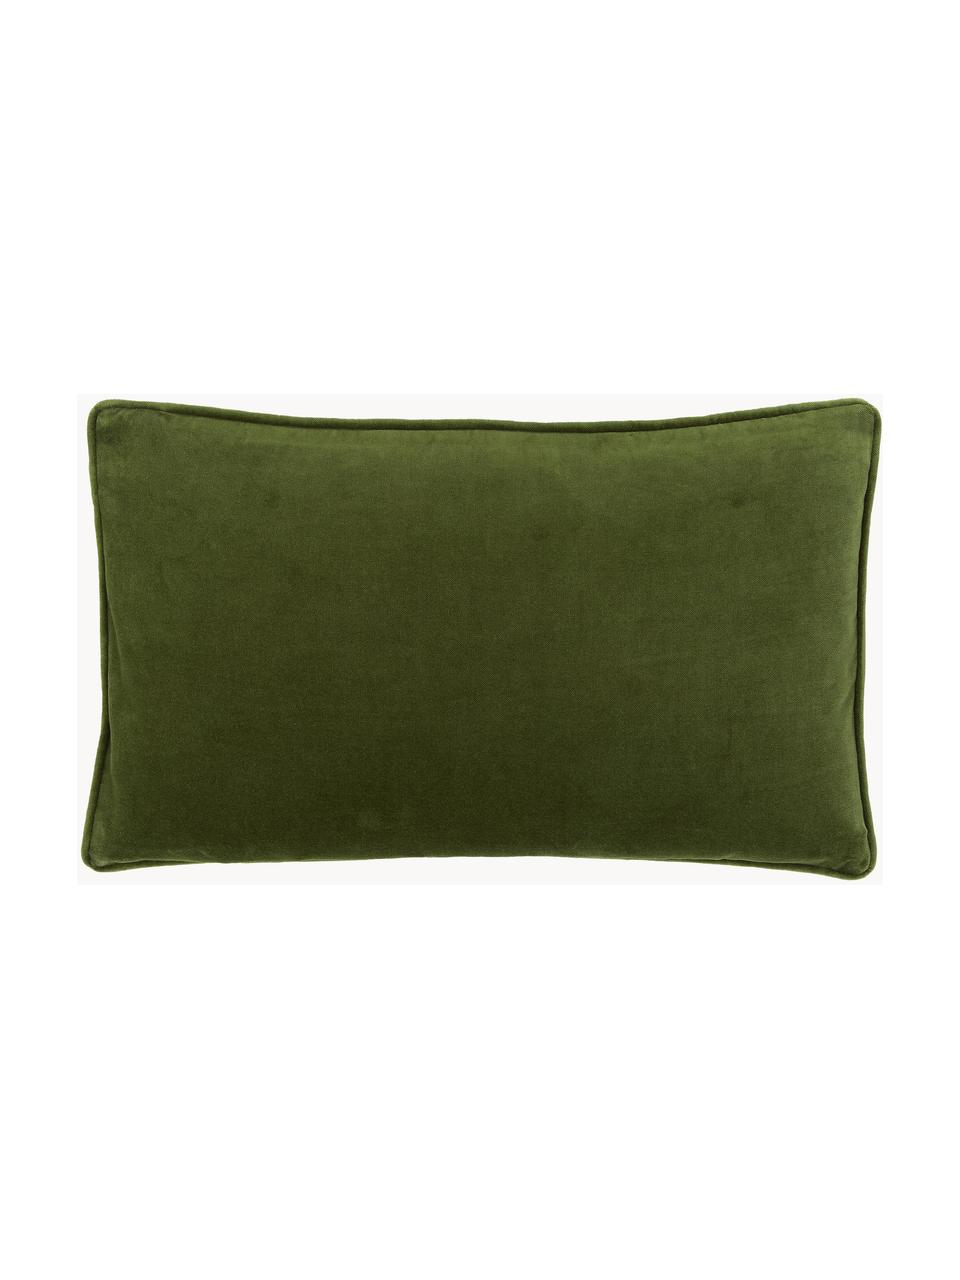 Funda de cojín de terciopelo Dana, 100% terciopelo de algodón, Verde oliva, An 30 x L 50 cm